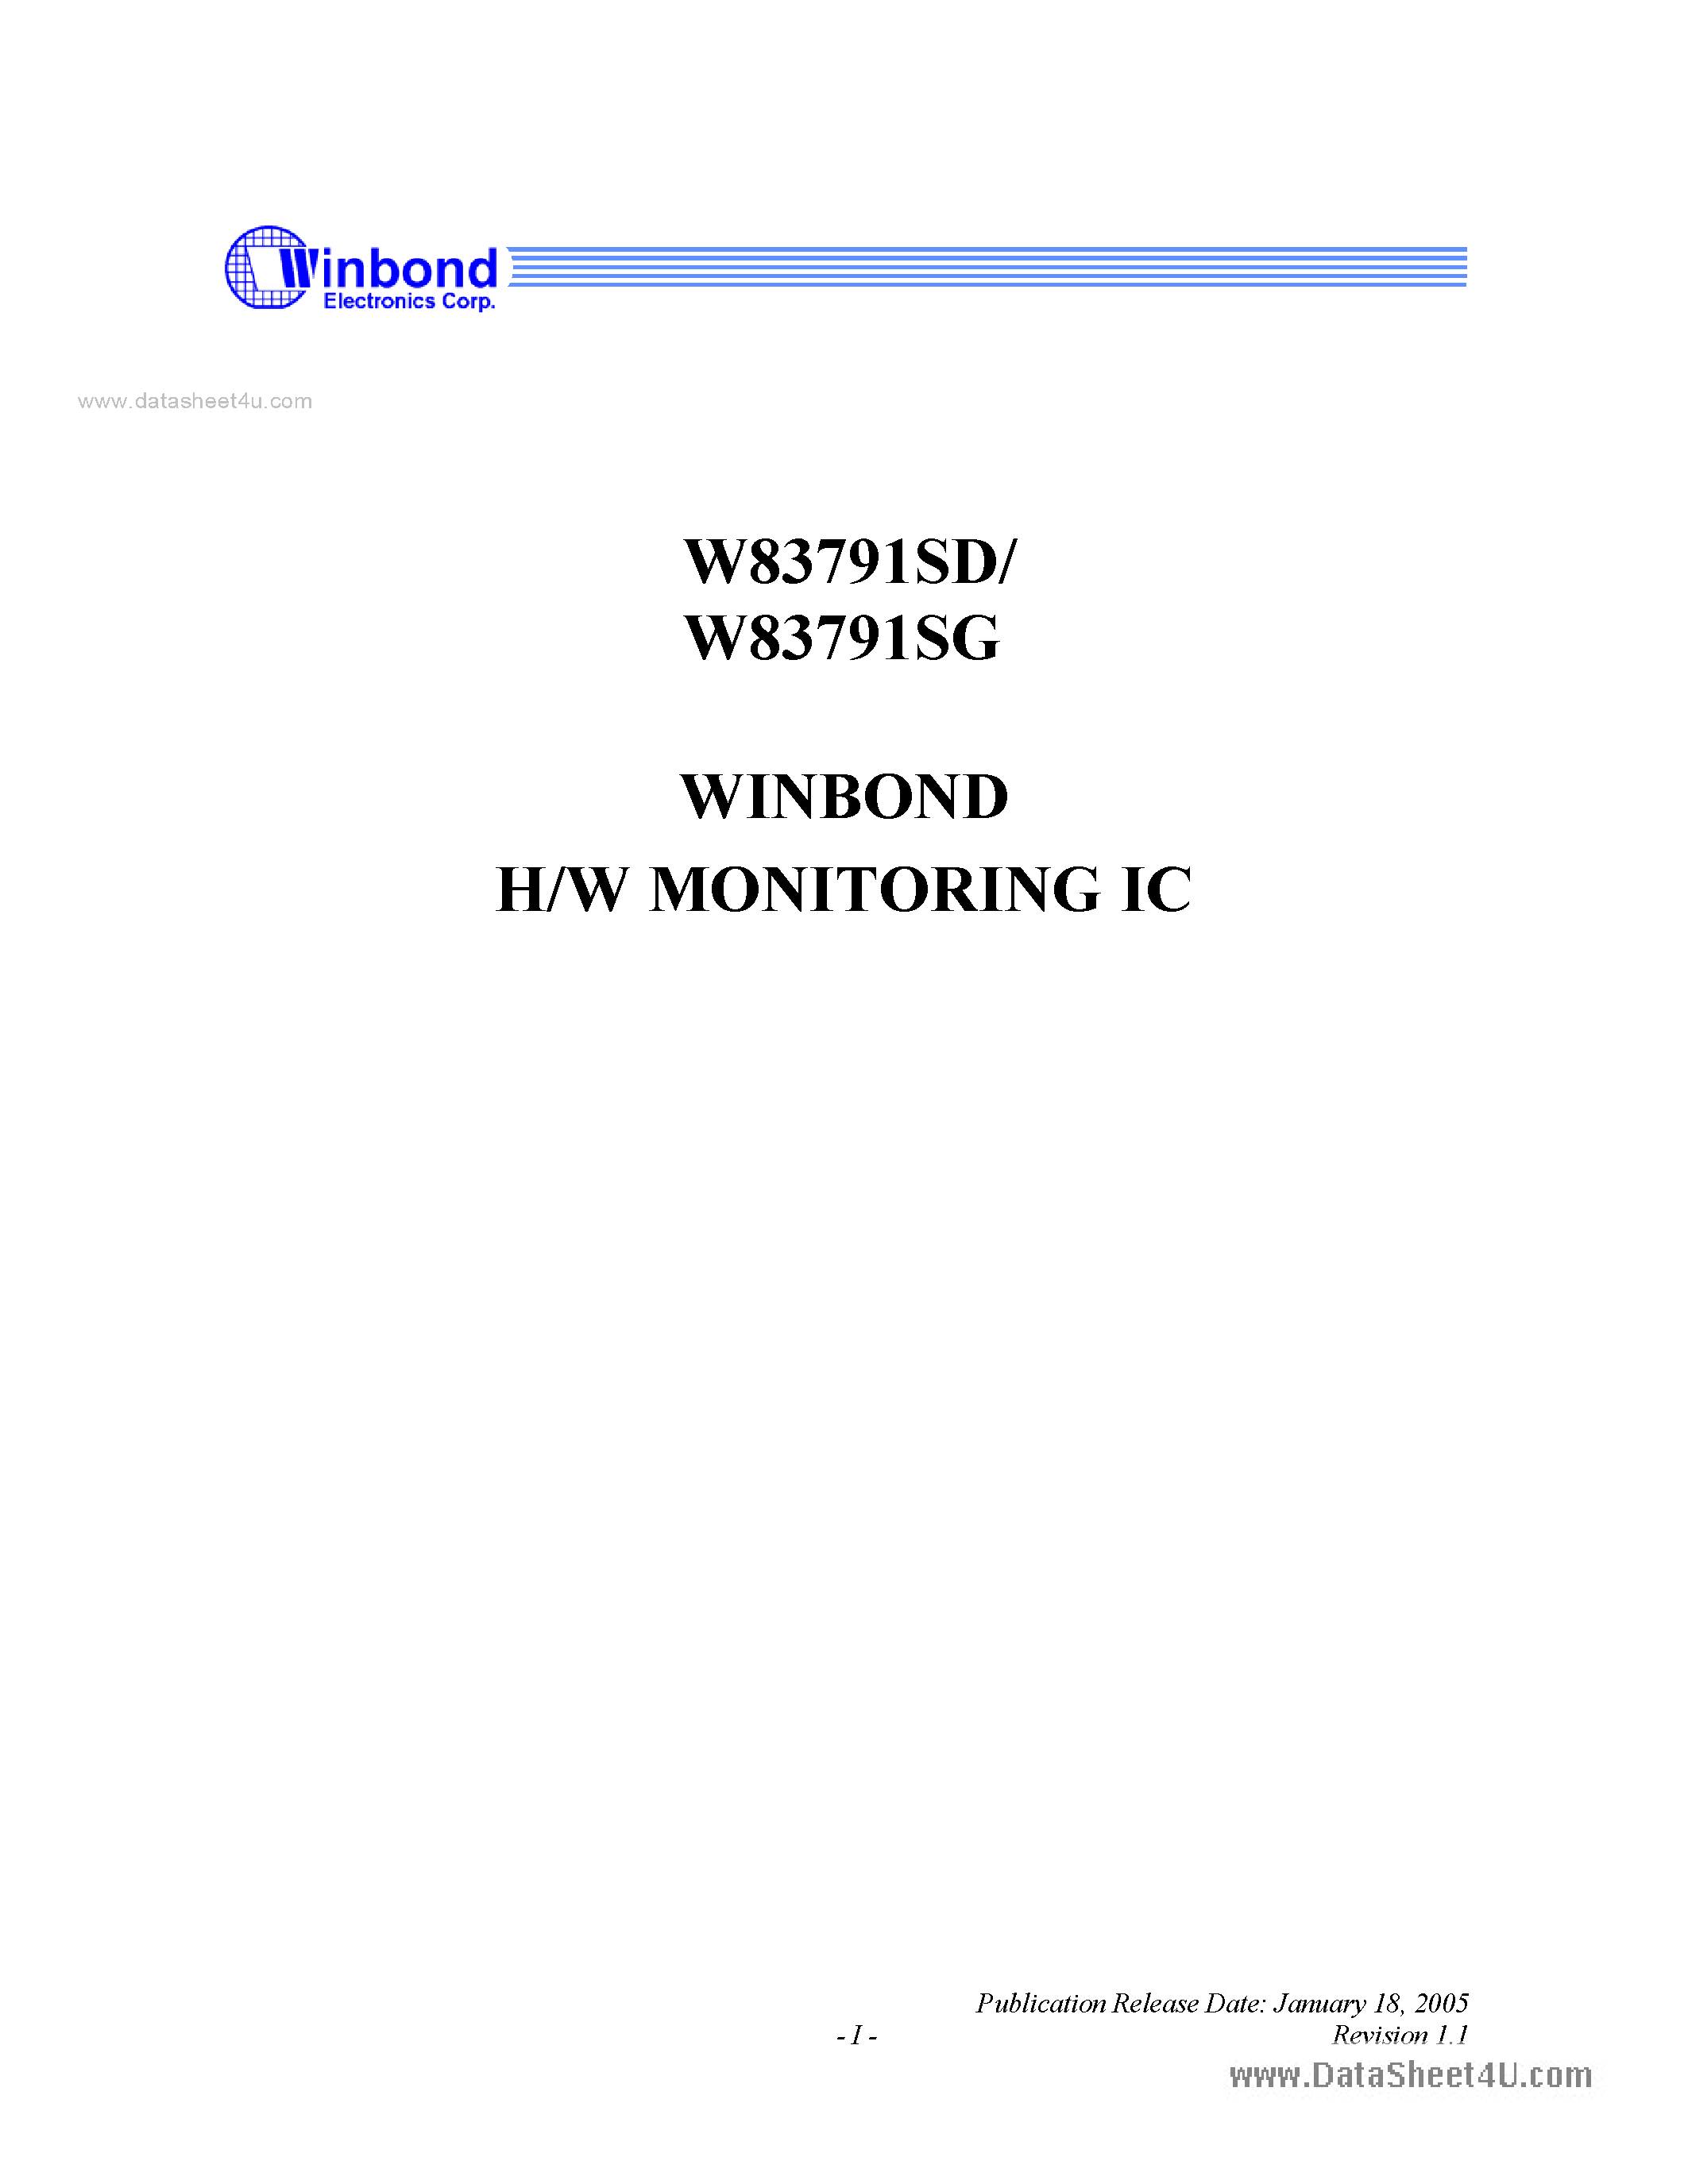 Даташит W83791SD - H/W MONITORING IC страница 1